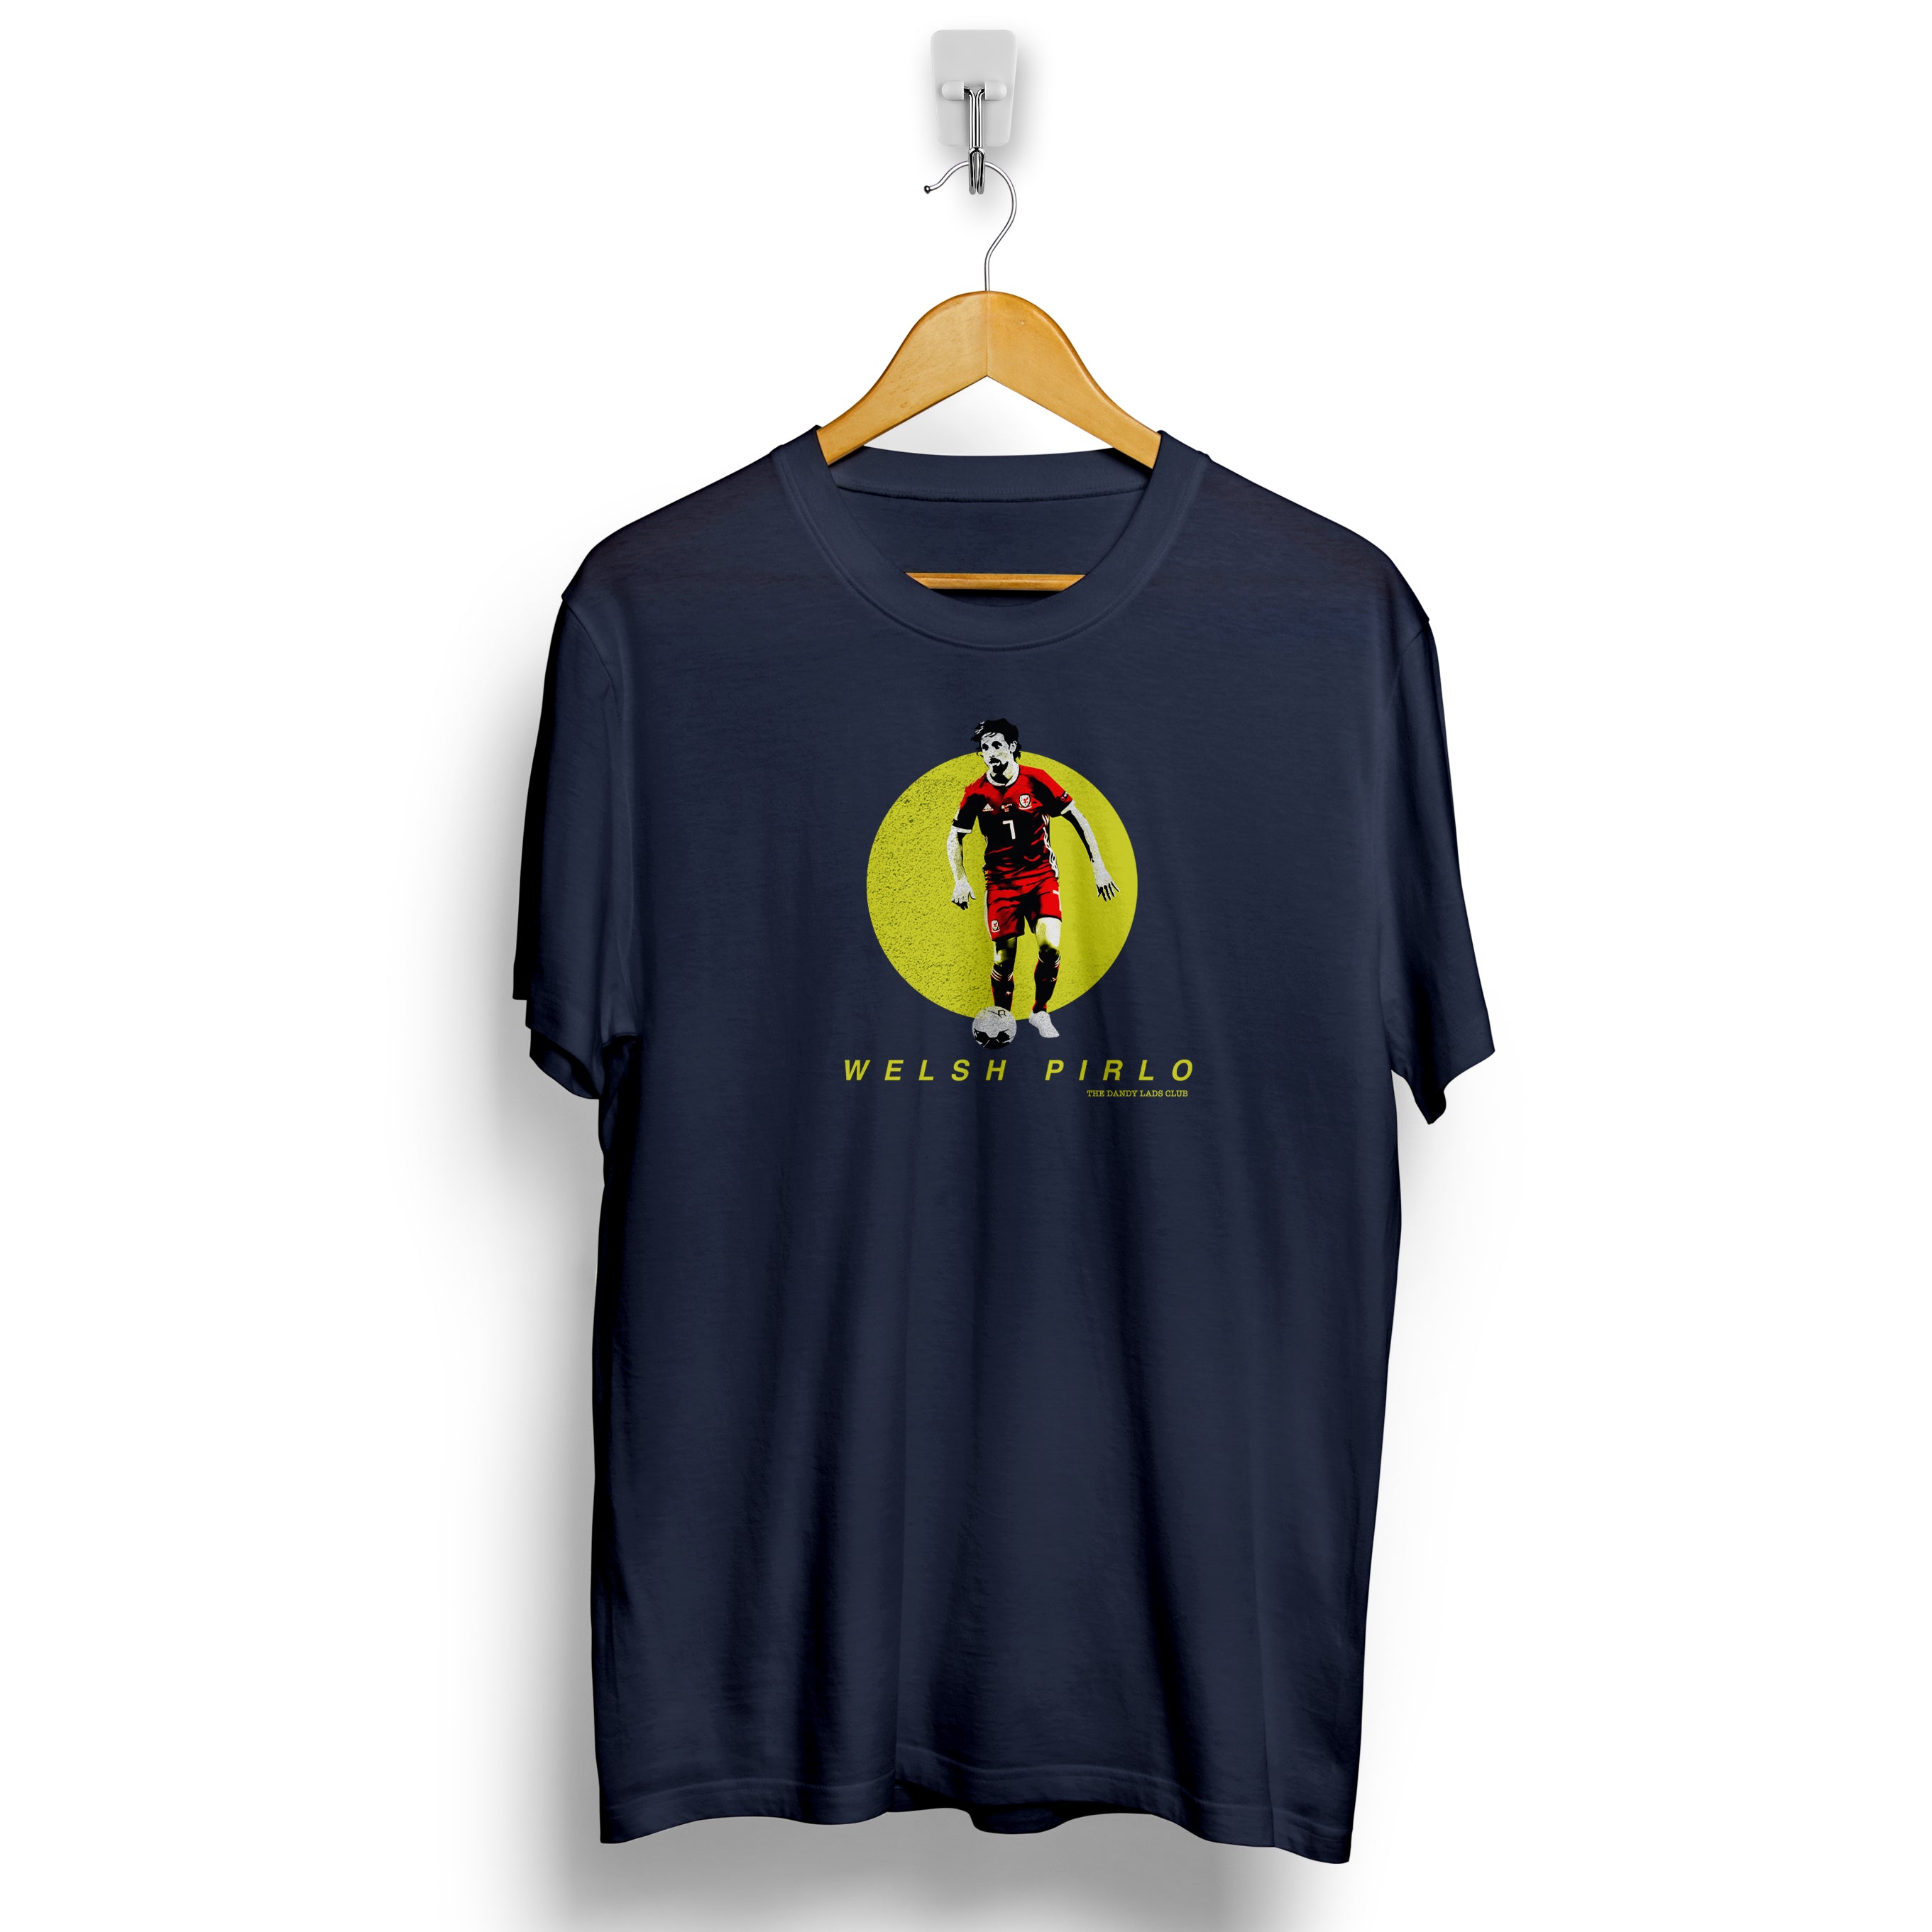 The Welsh Pirlo Footbal Awaydays T Shirt